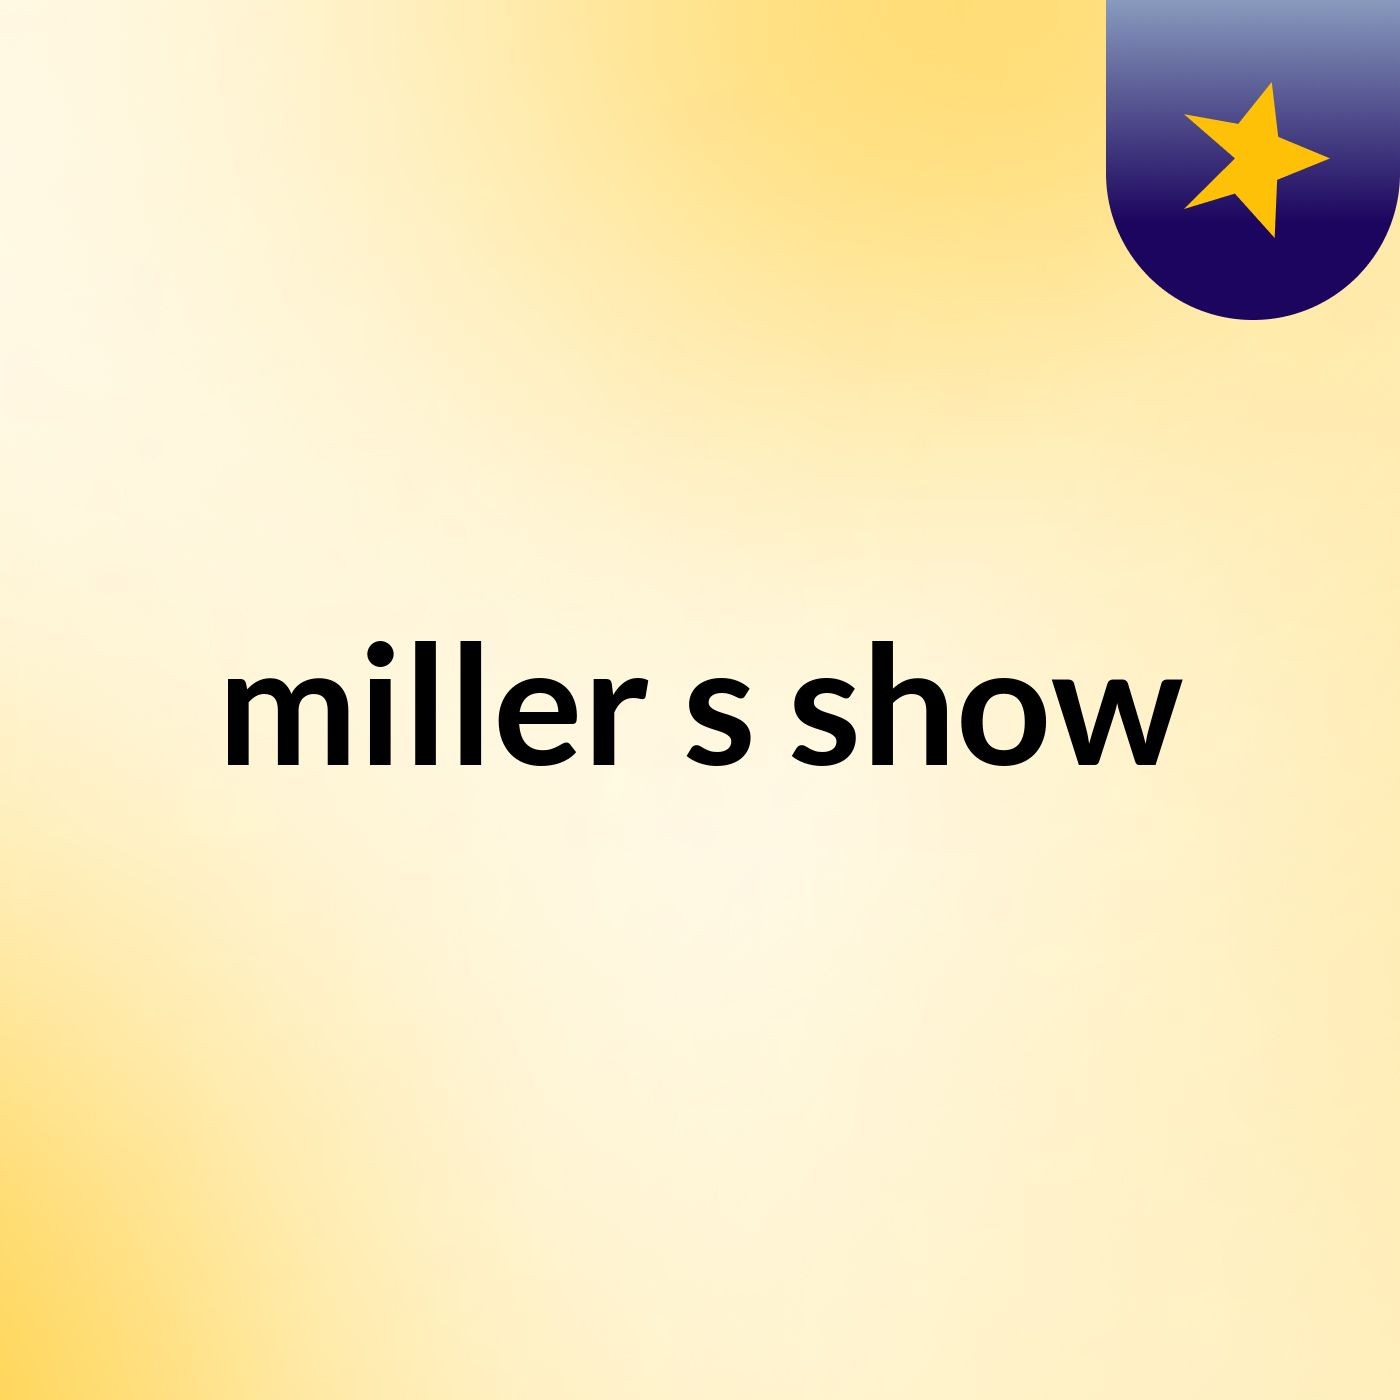 miller's show